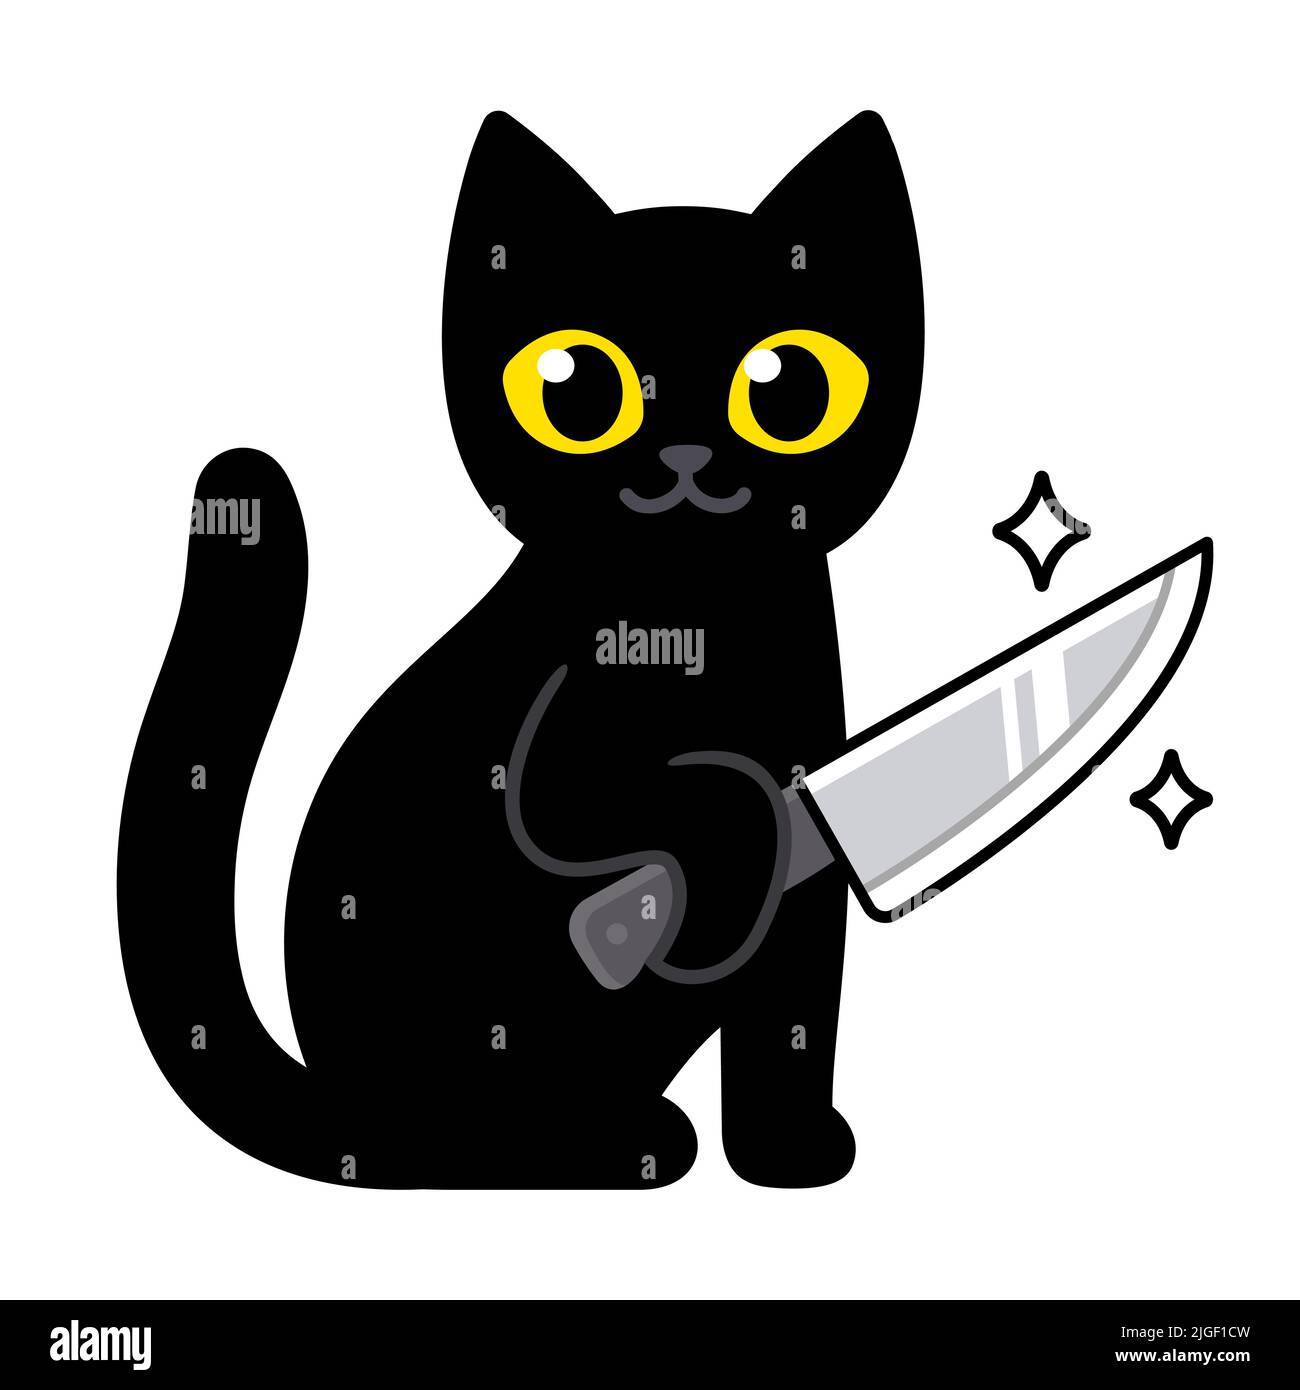 Funny cute cartoon black cat holding a knife. Horror humor vector illustration. Stock Vector